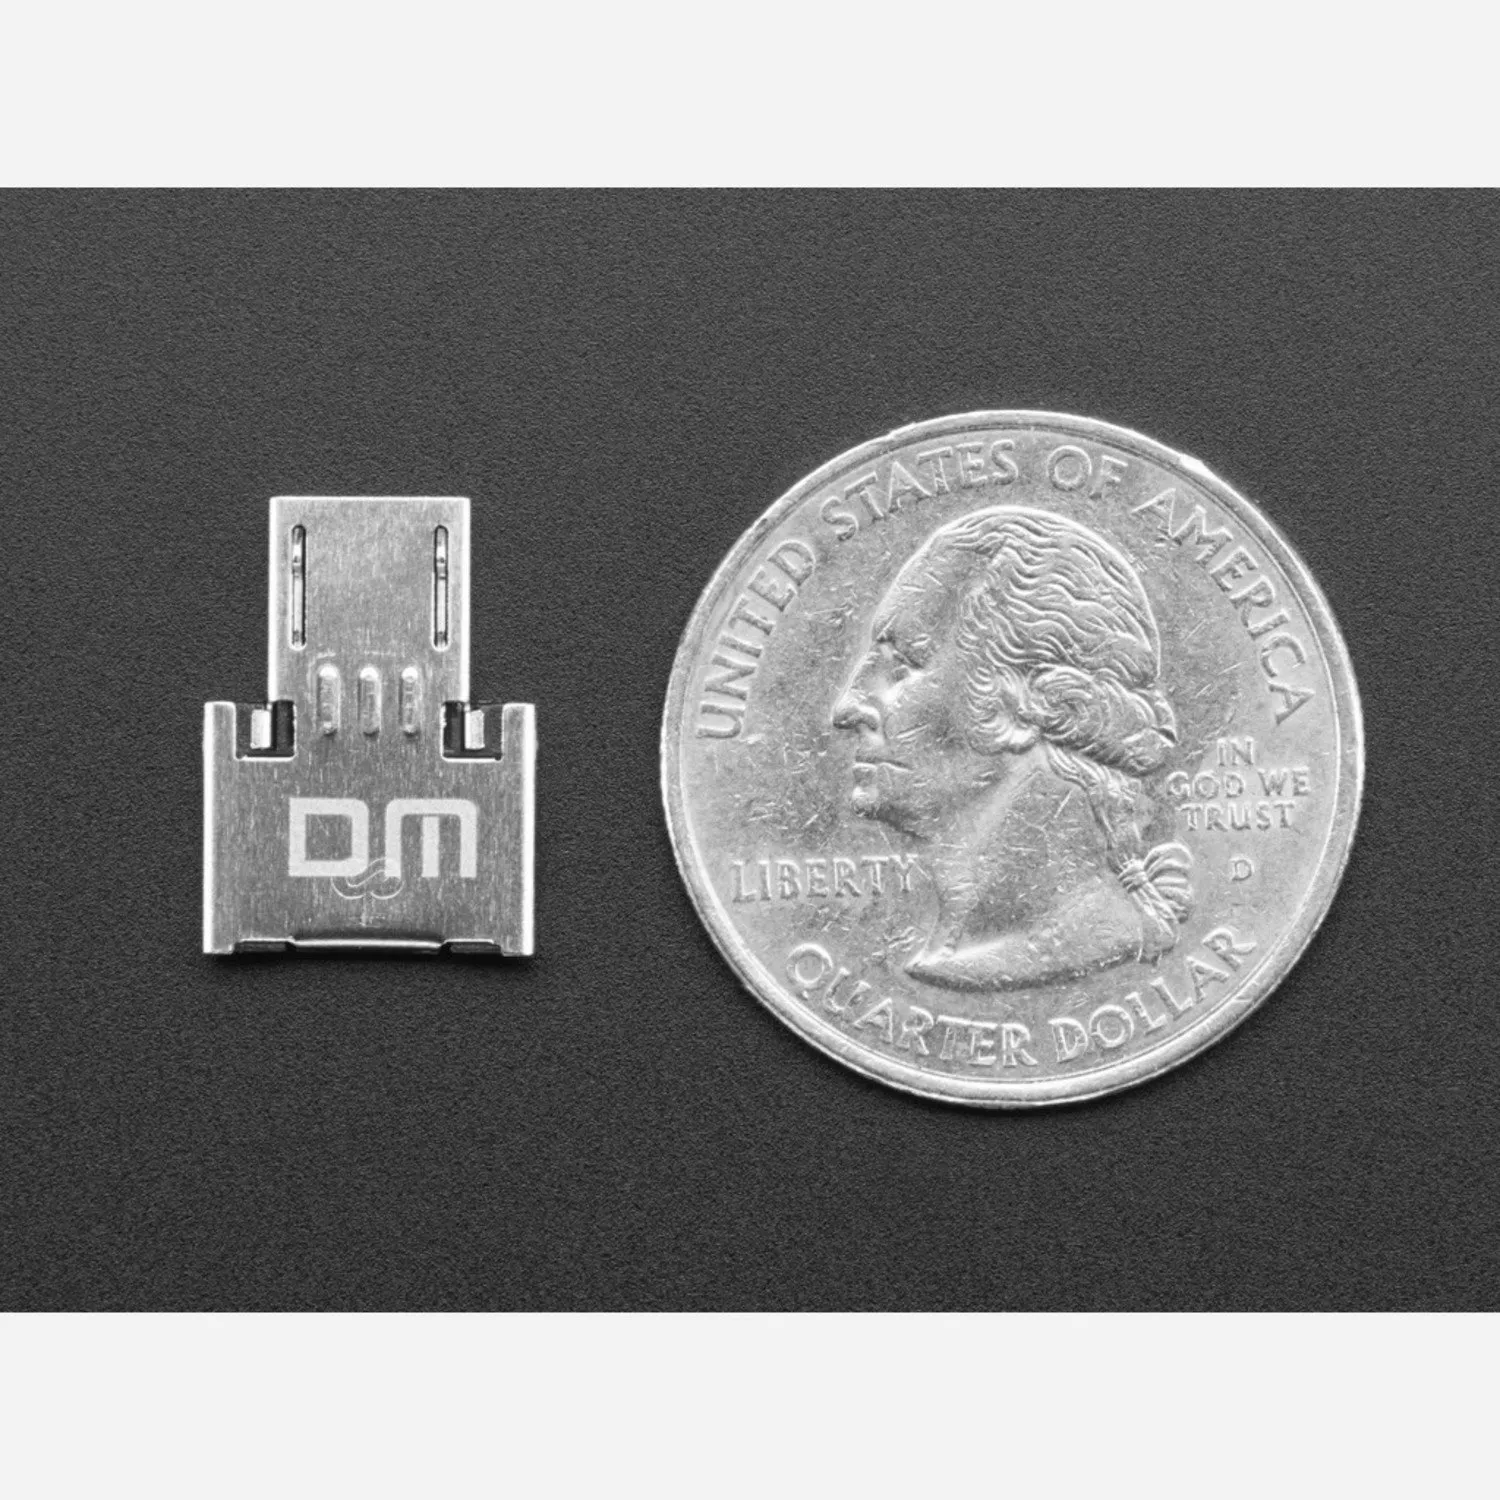 Photo of Tiny OTG Adapter - USB Micro to USB